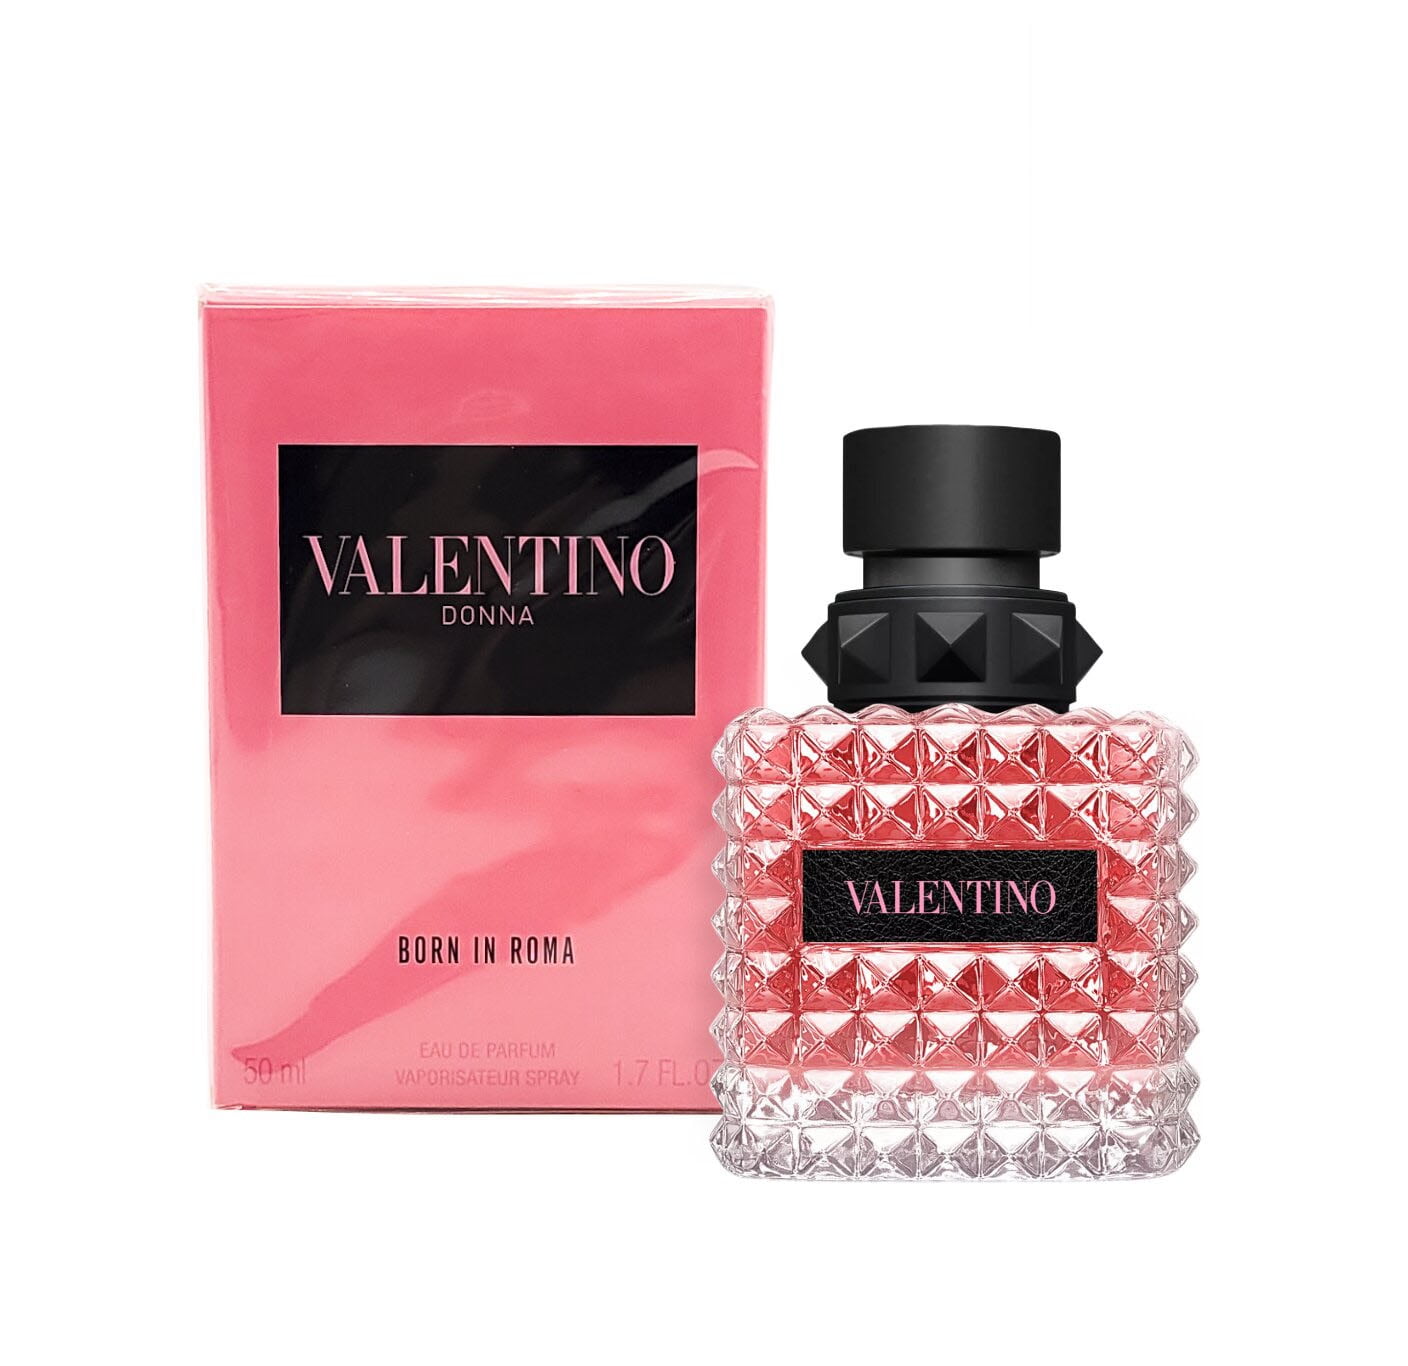 Valentino Donna by Valentino 1.7 oz Eau de Parfum Spray / Women